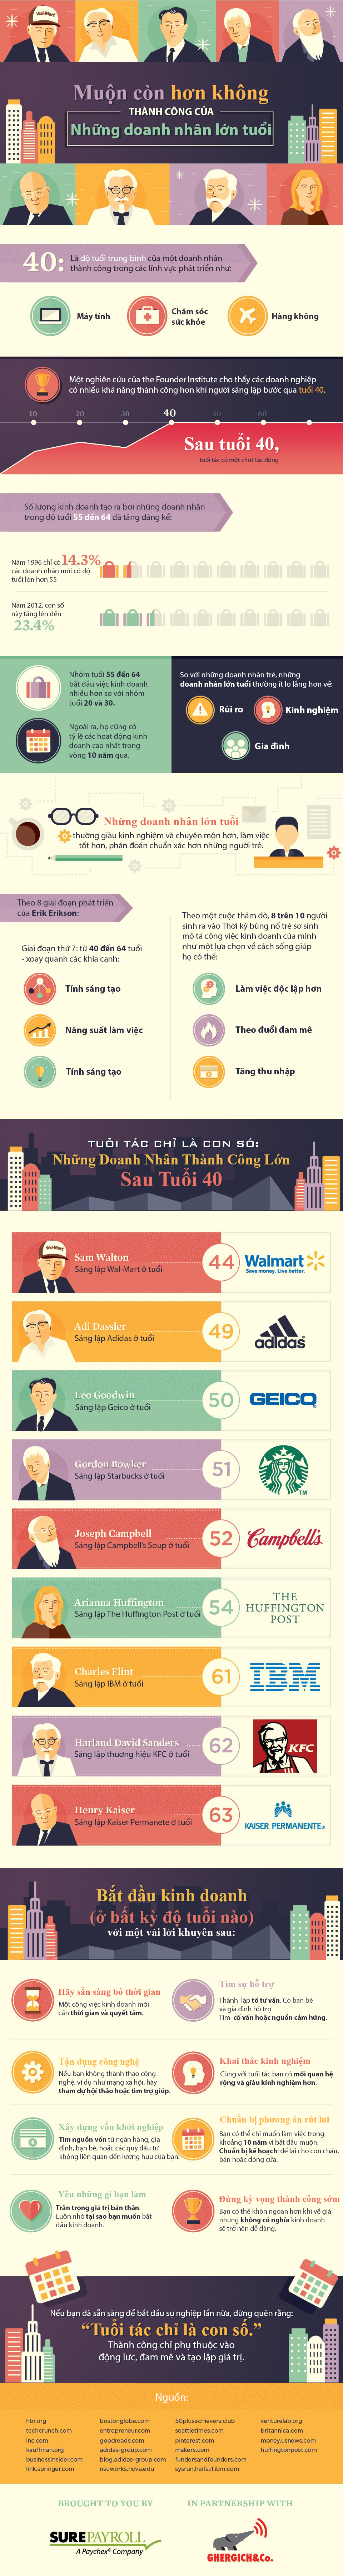 success-of-older-entrepreneurs-infographic